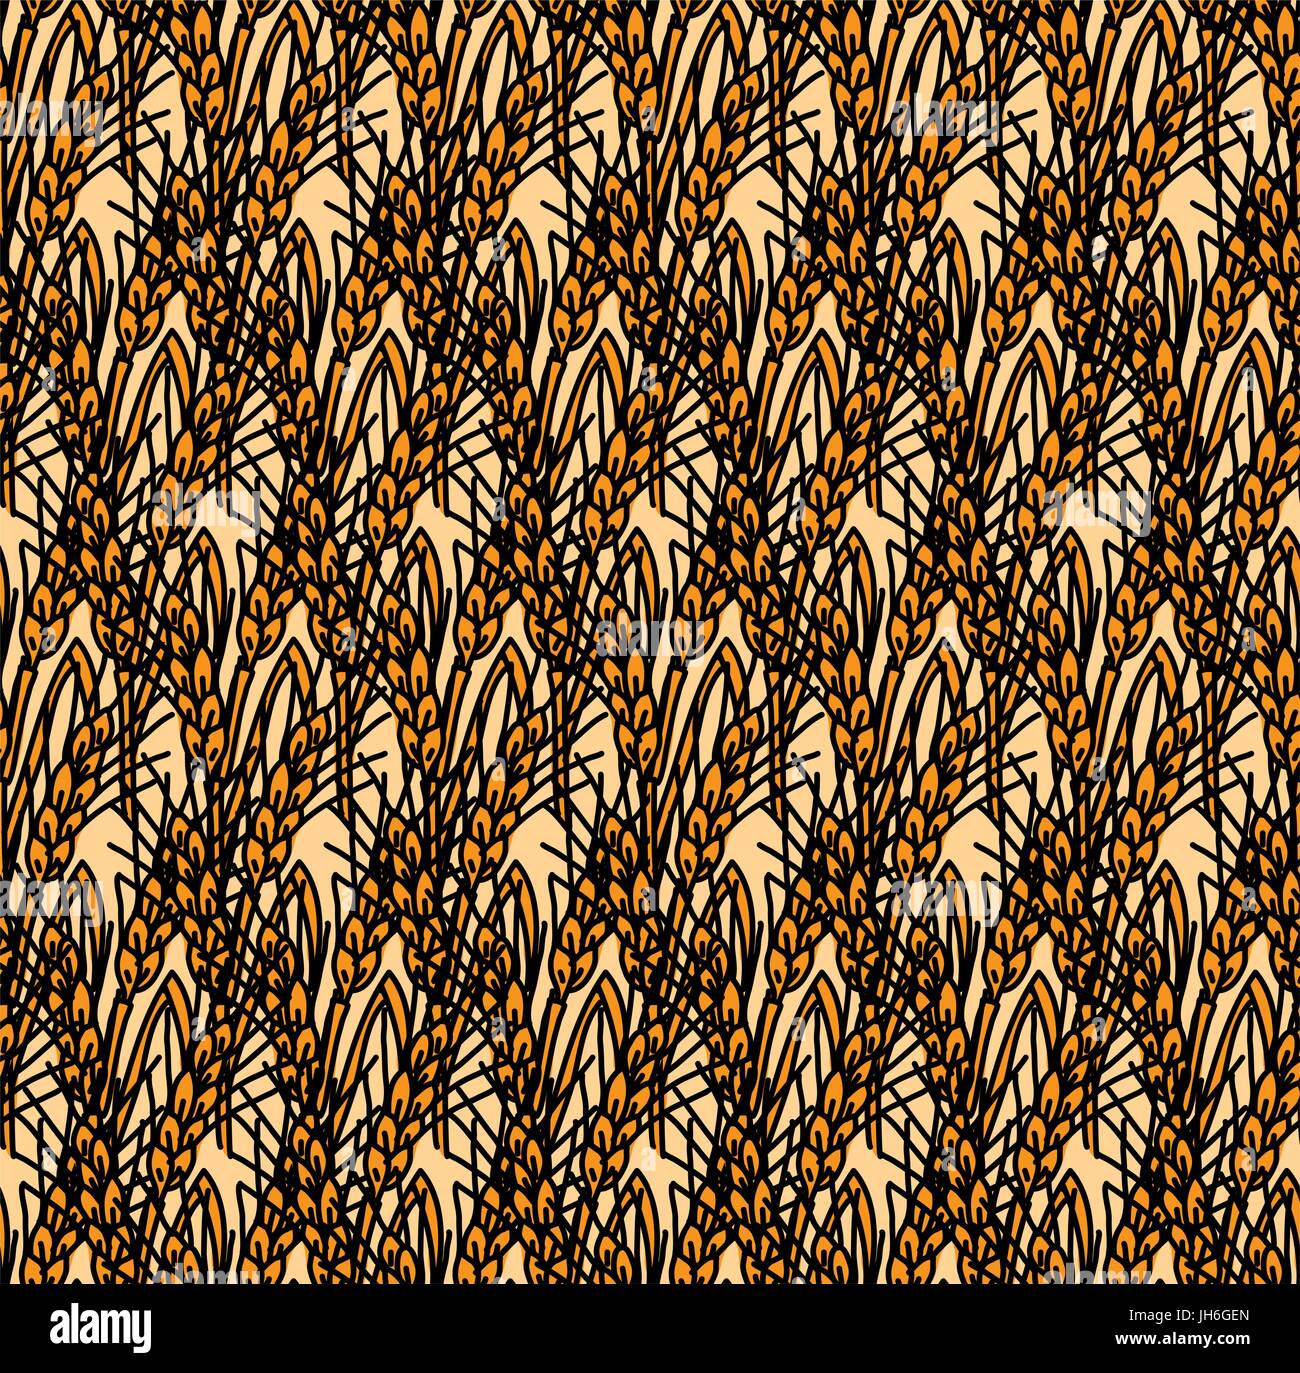 Wheat rye field seamless pattern. Stock Vector